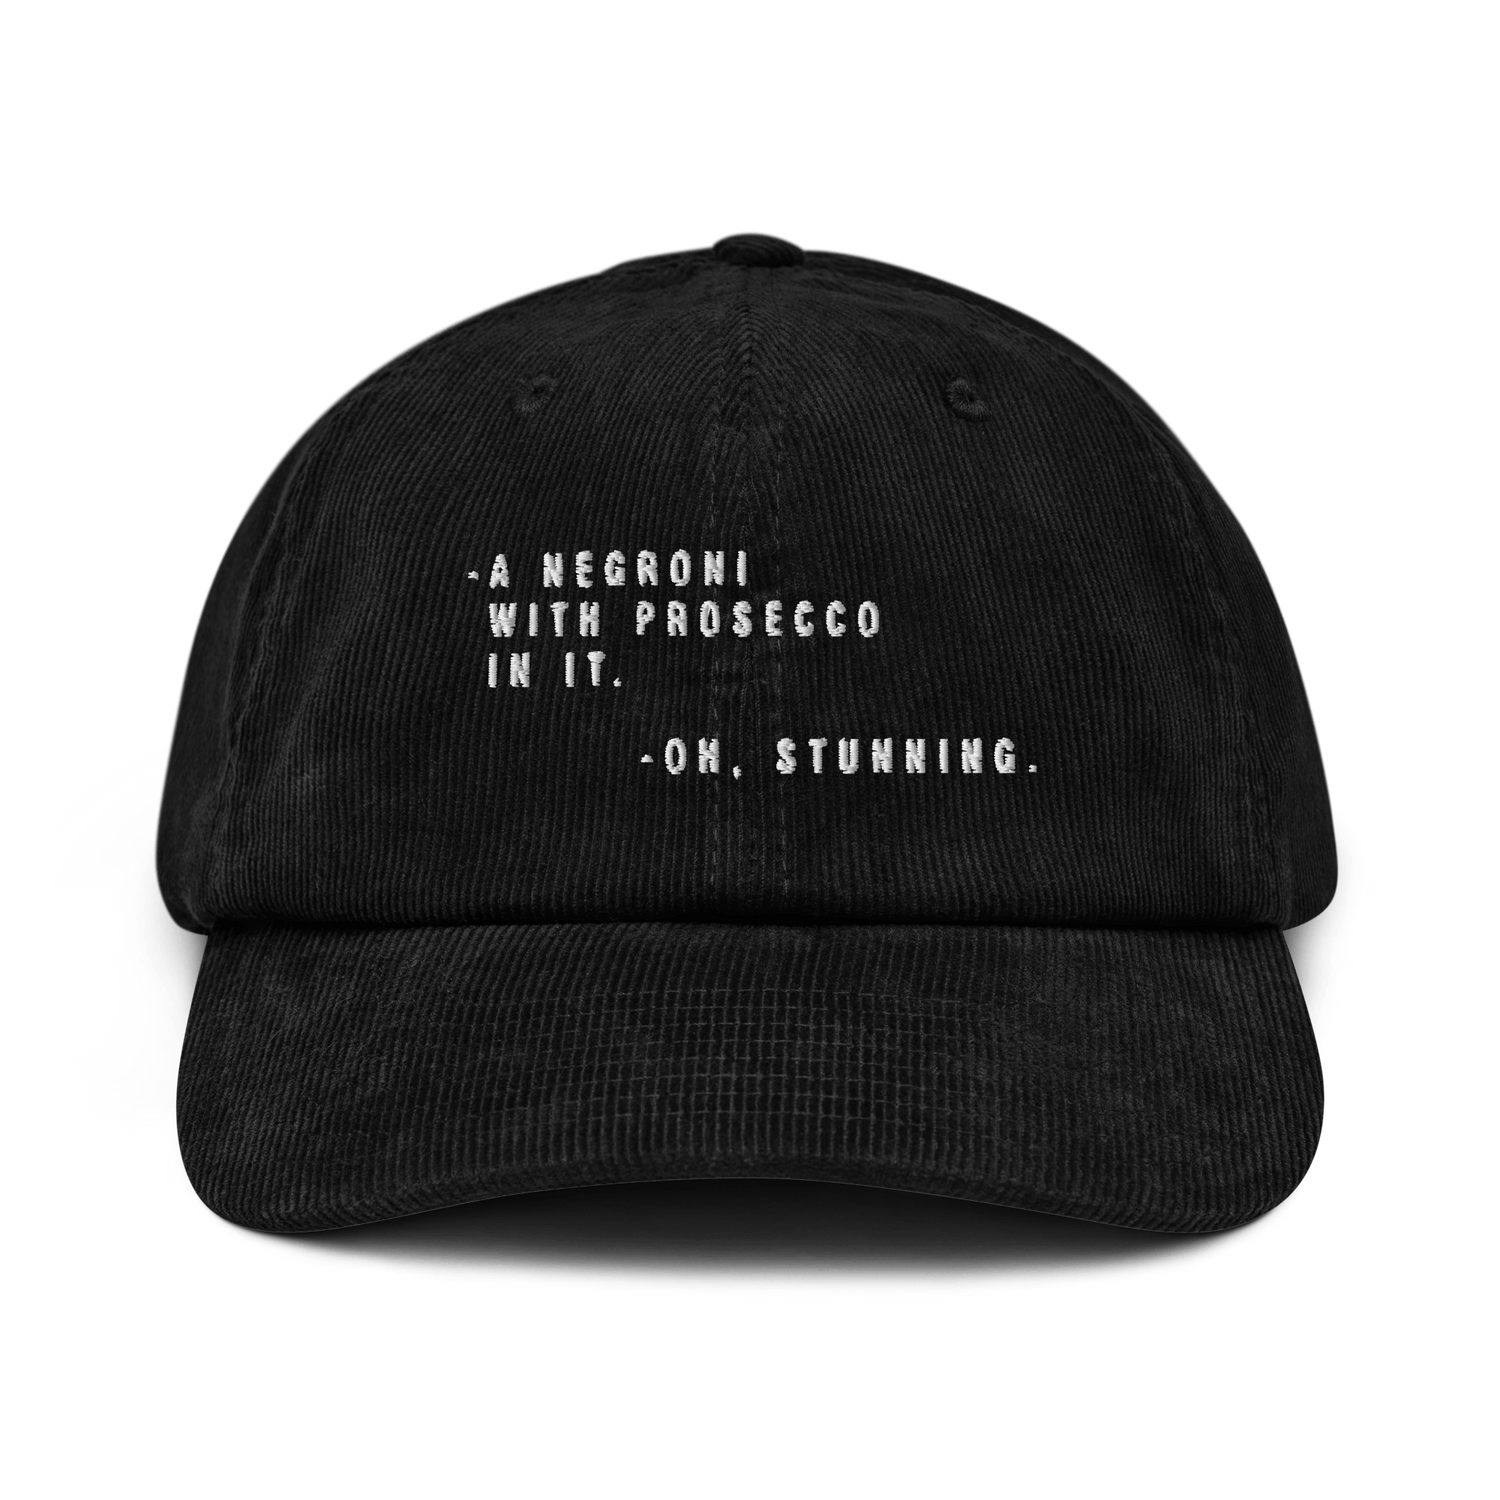 The Sbagliato Conversation Corduroy hat